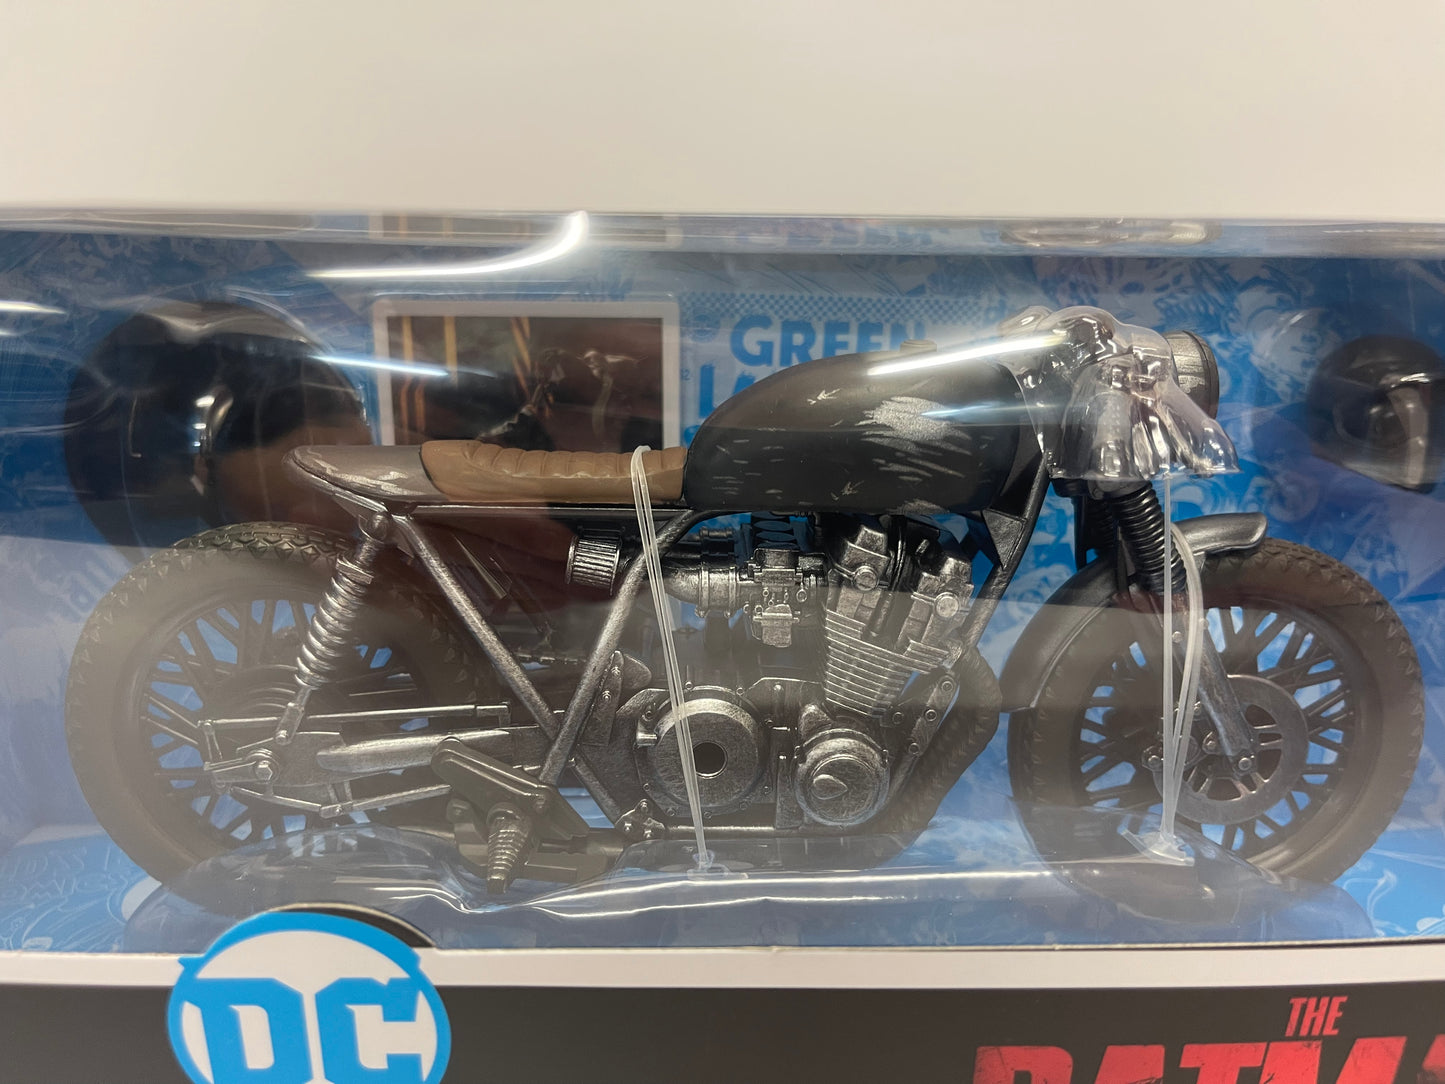 McFarlane Toys DC Batcycle: The Batman (Movie) Action Vehicle